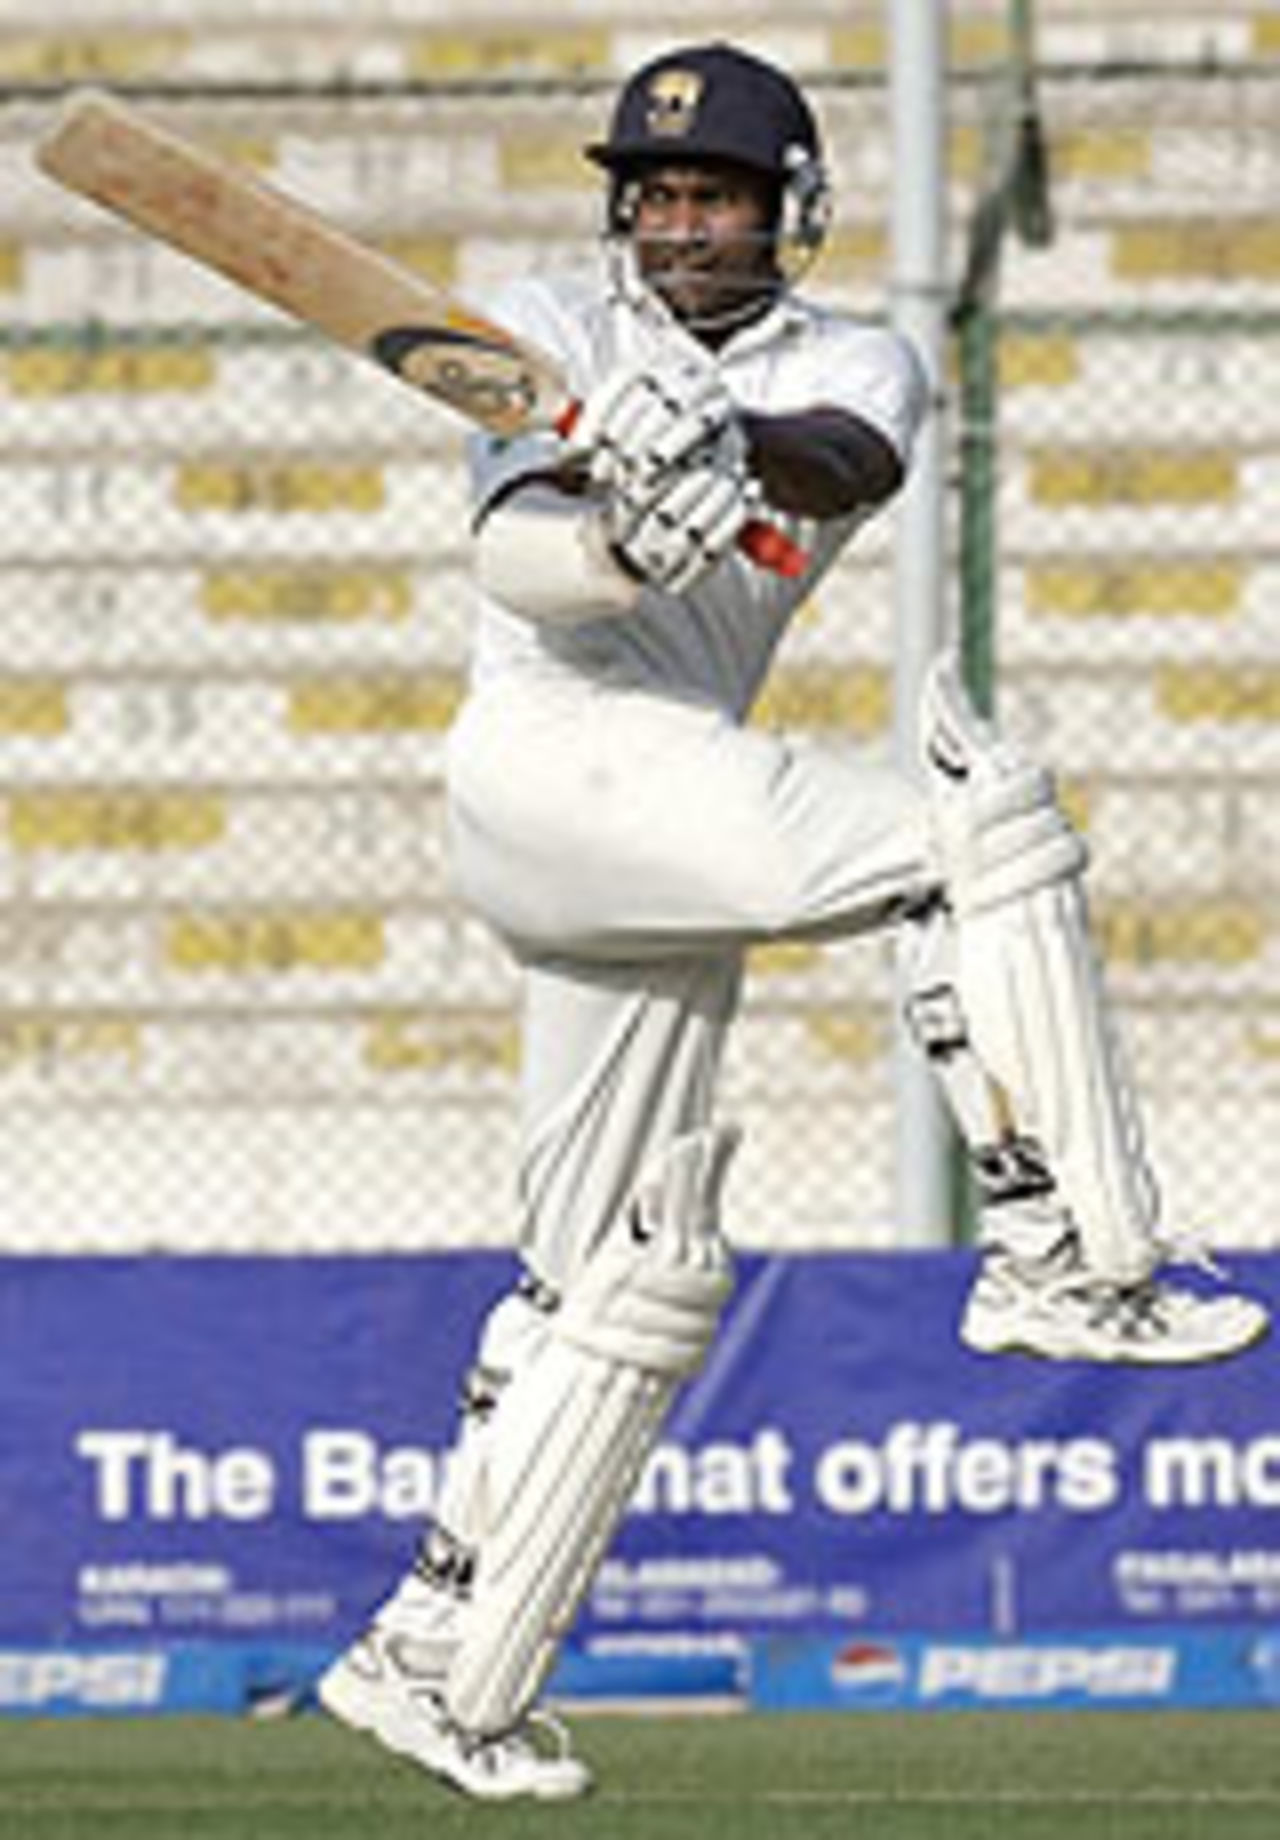 Sanath Jayasuriya leads Sri Lanka's counterattack with a rousing 97 not out, on the third day at Karachi, Pakistan v Sri Lanka, 2nd Test, Karachi, 3rd day, October 30, 2004